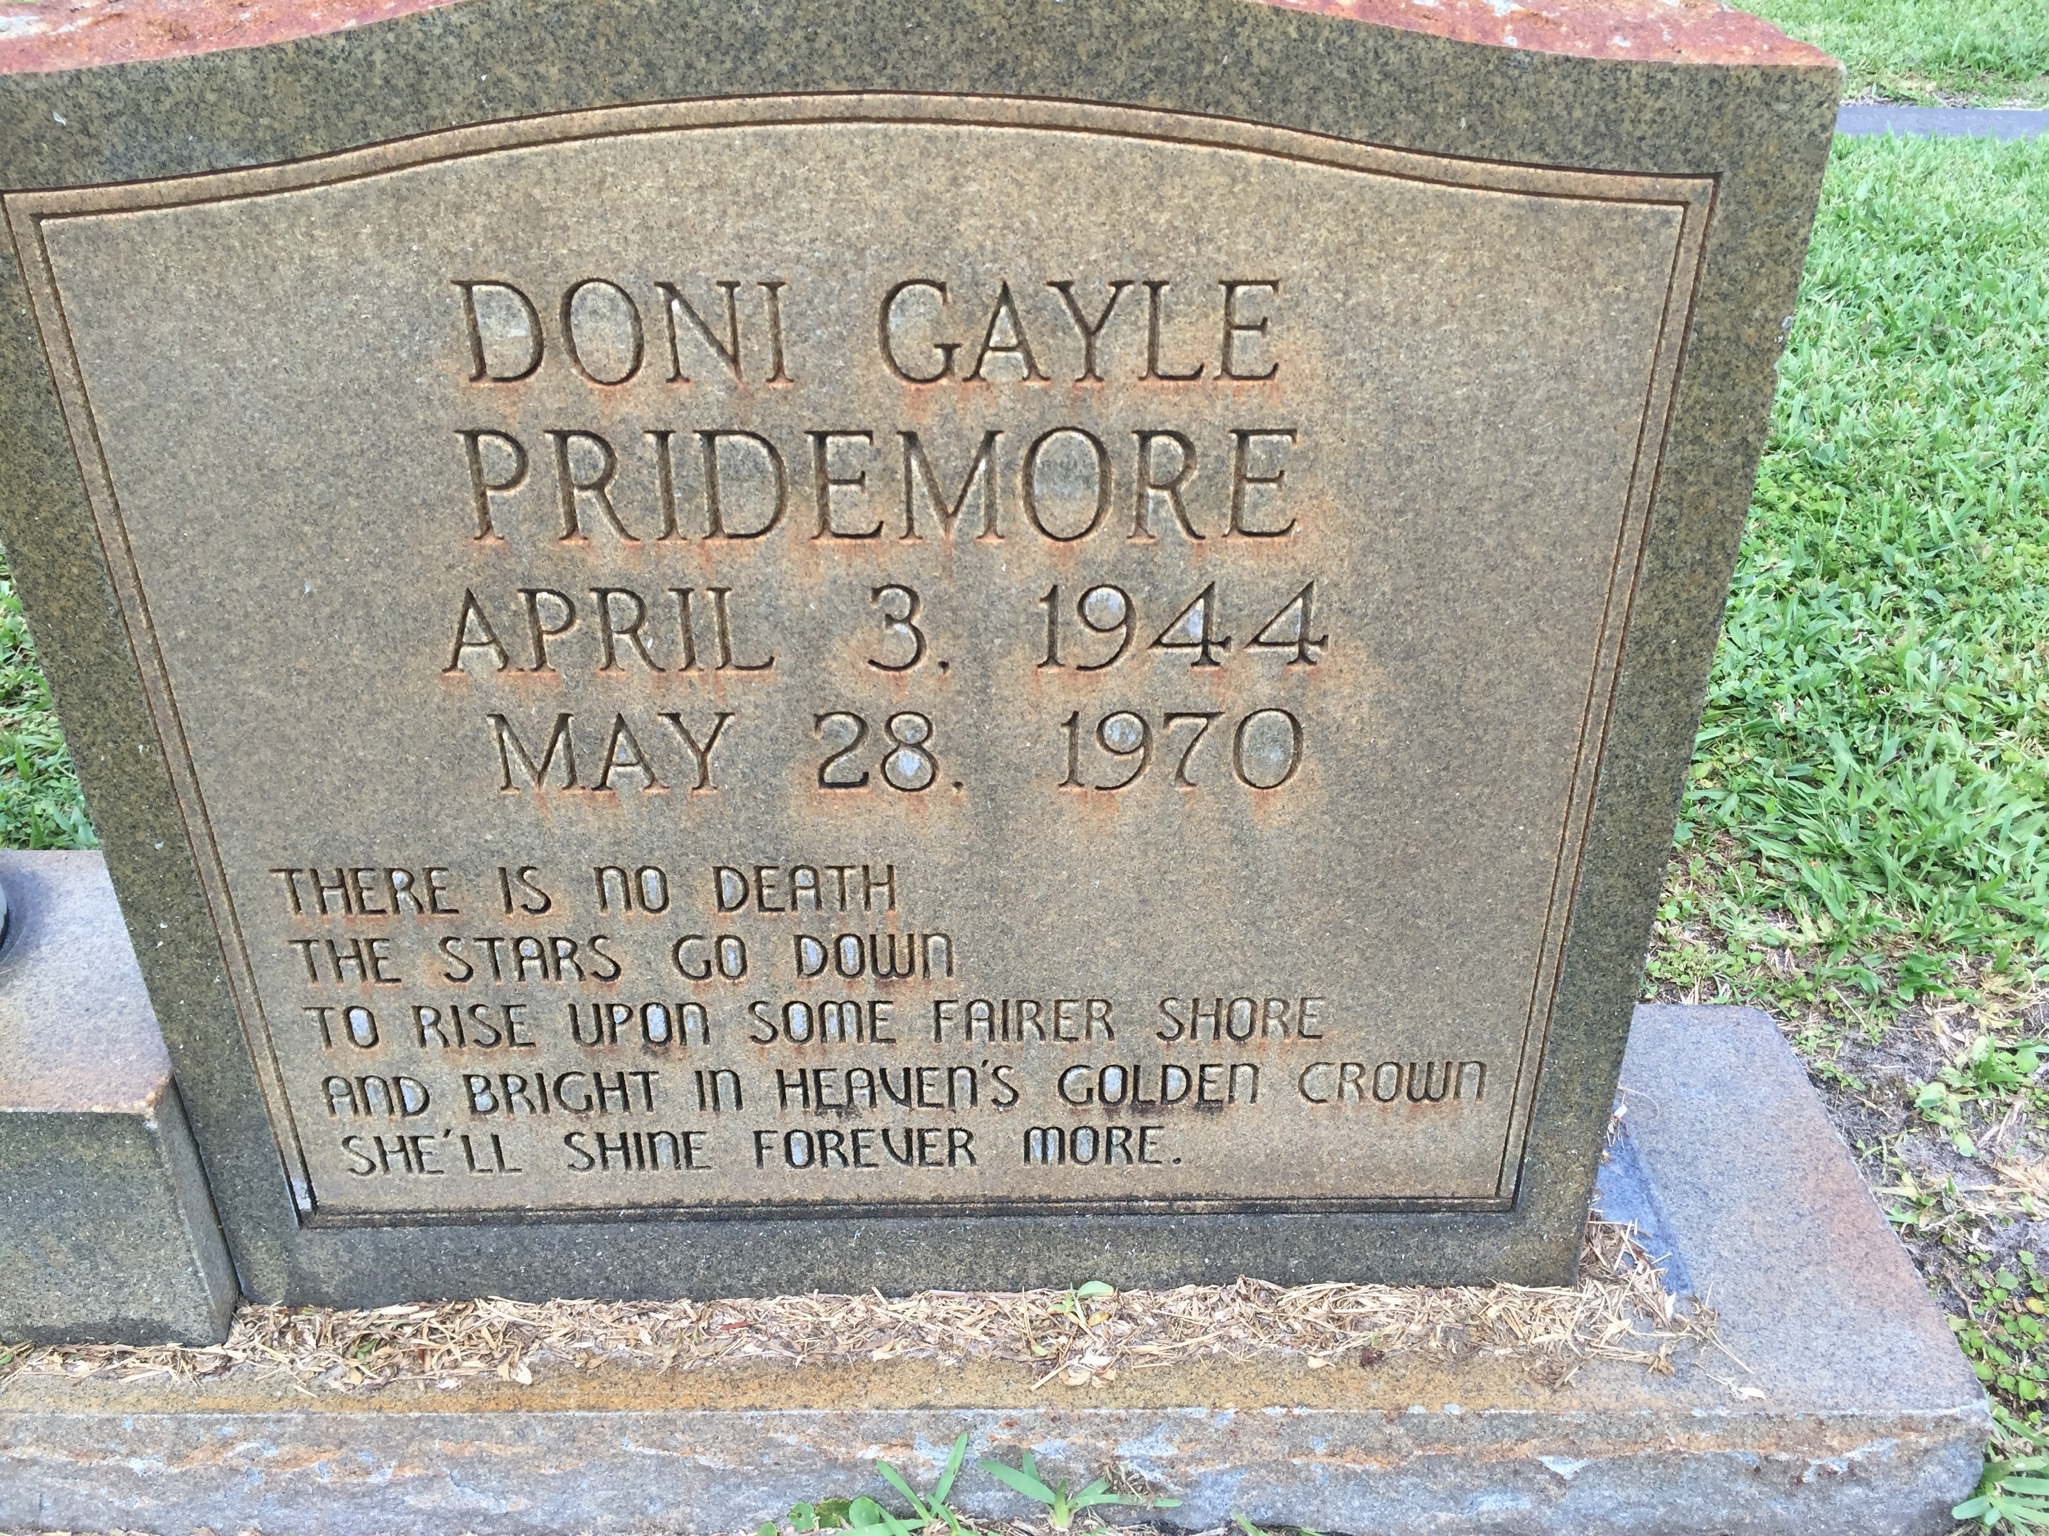 Doni Gayle Pridemore